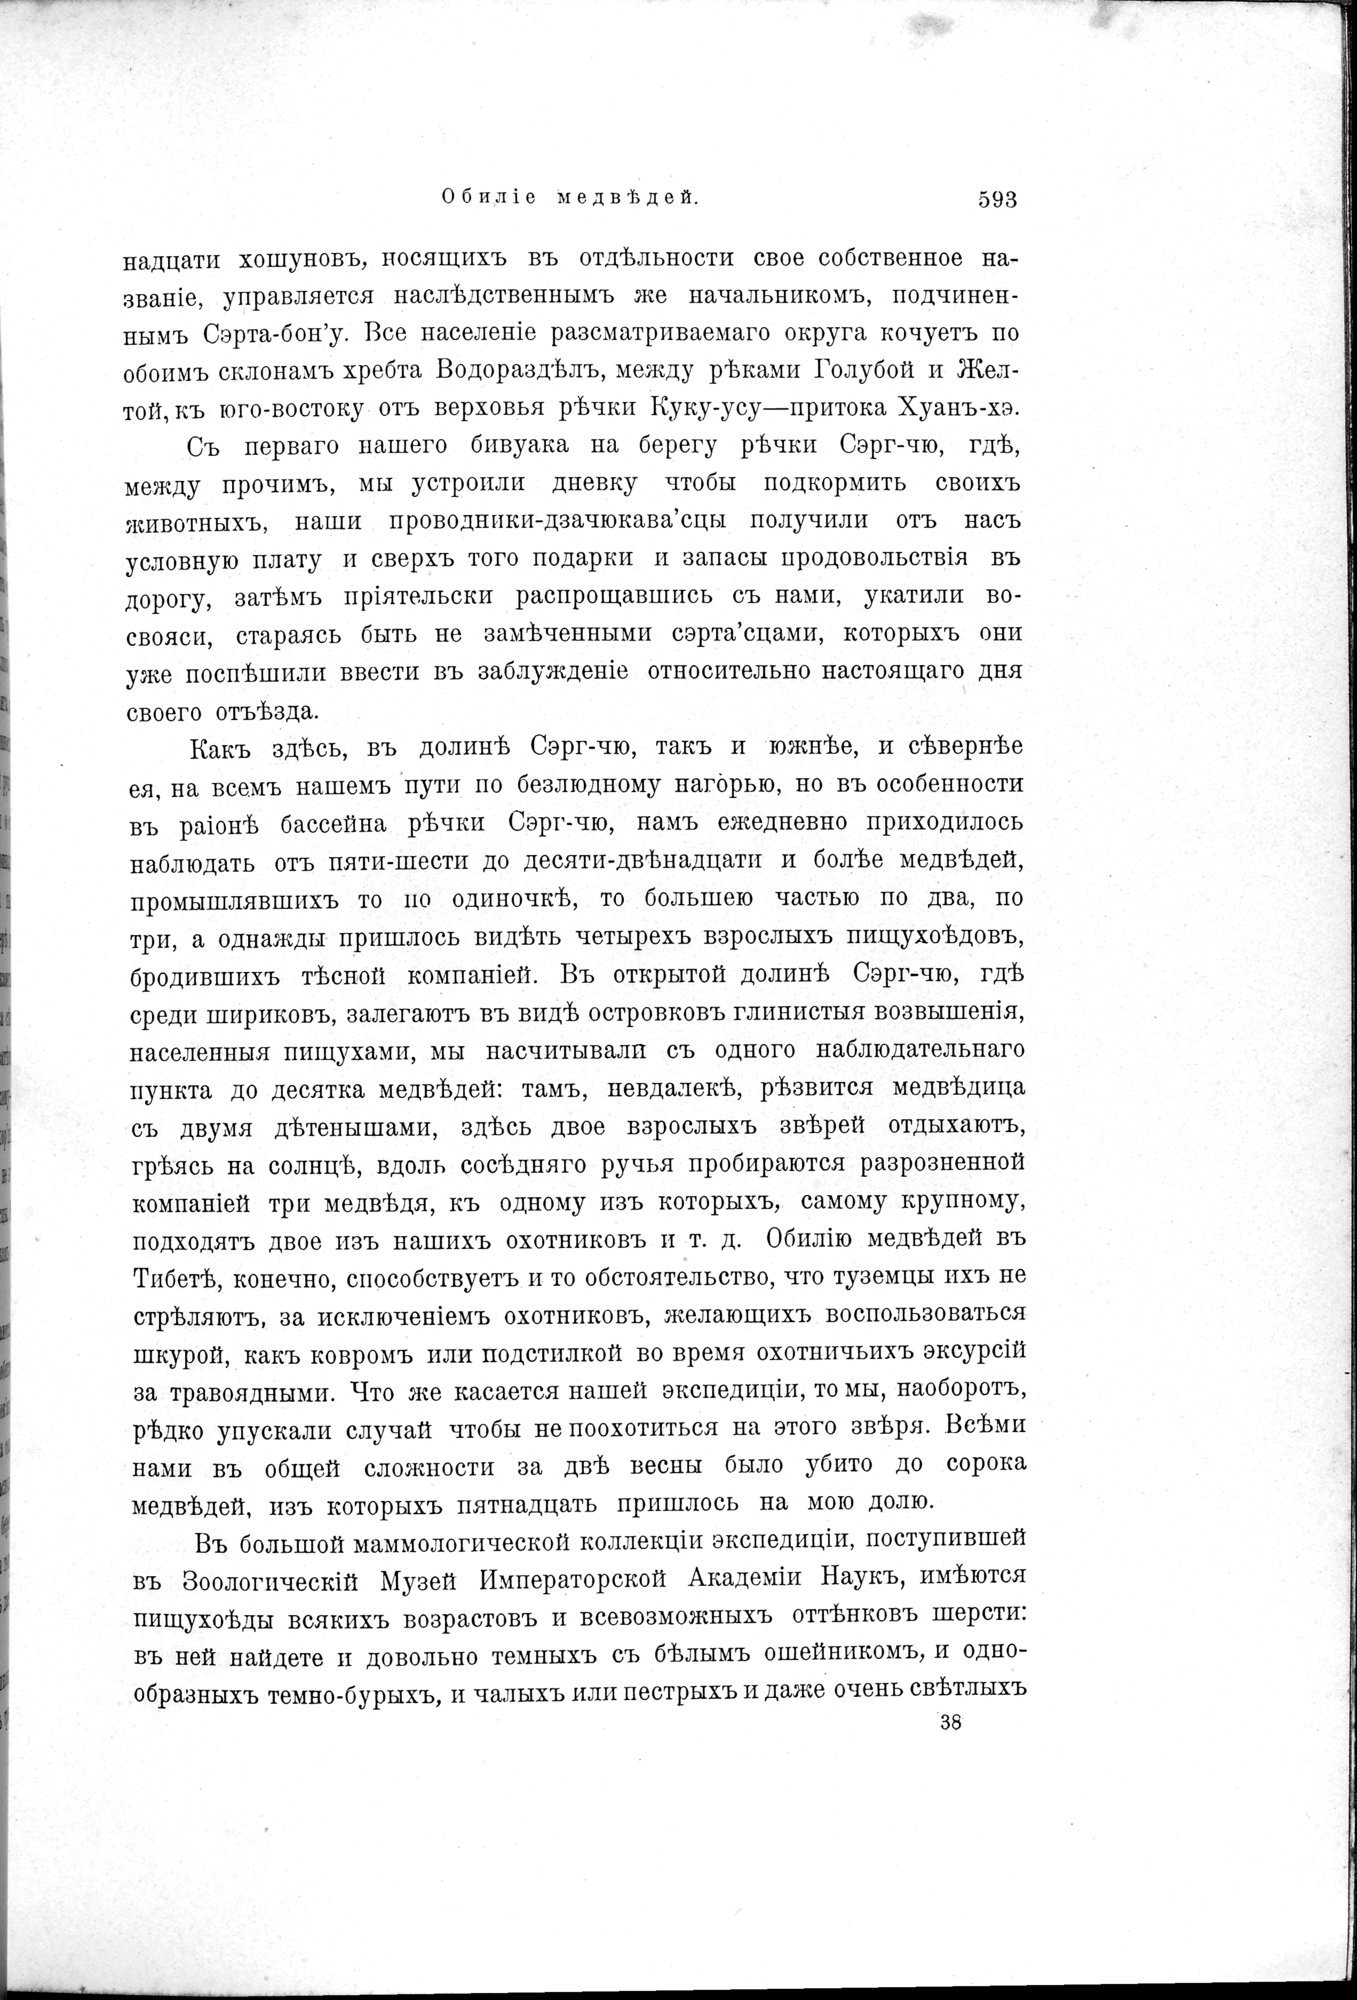 Mongoliia i Kam : vol.2 / Page 419 (Grayscale High Resolution Image)